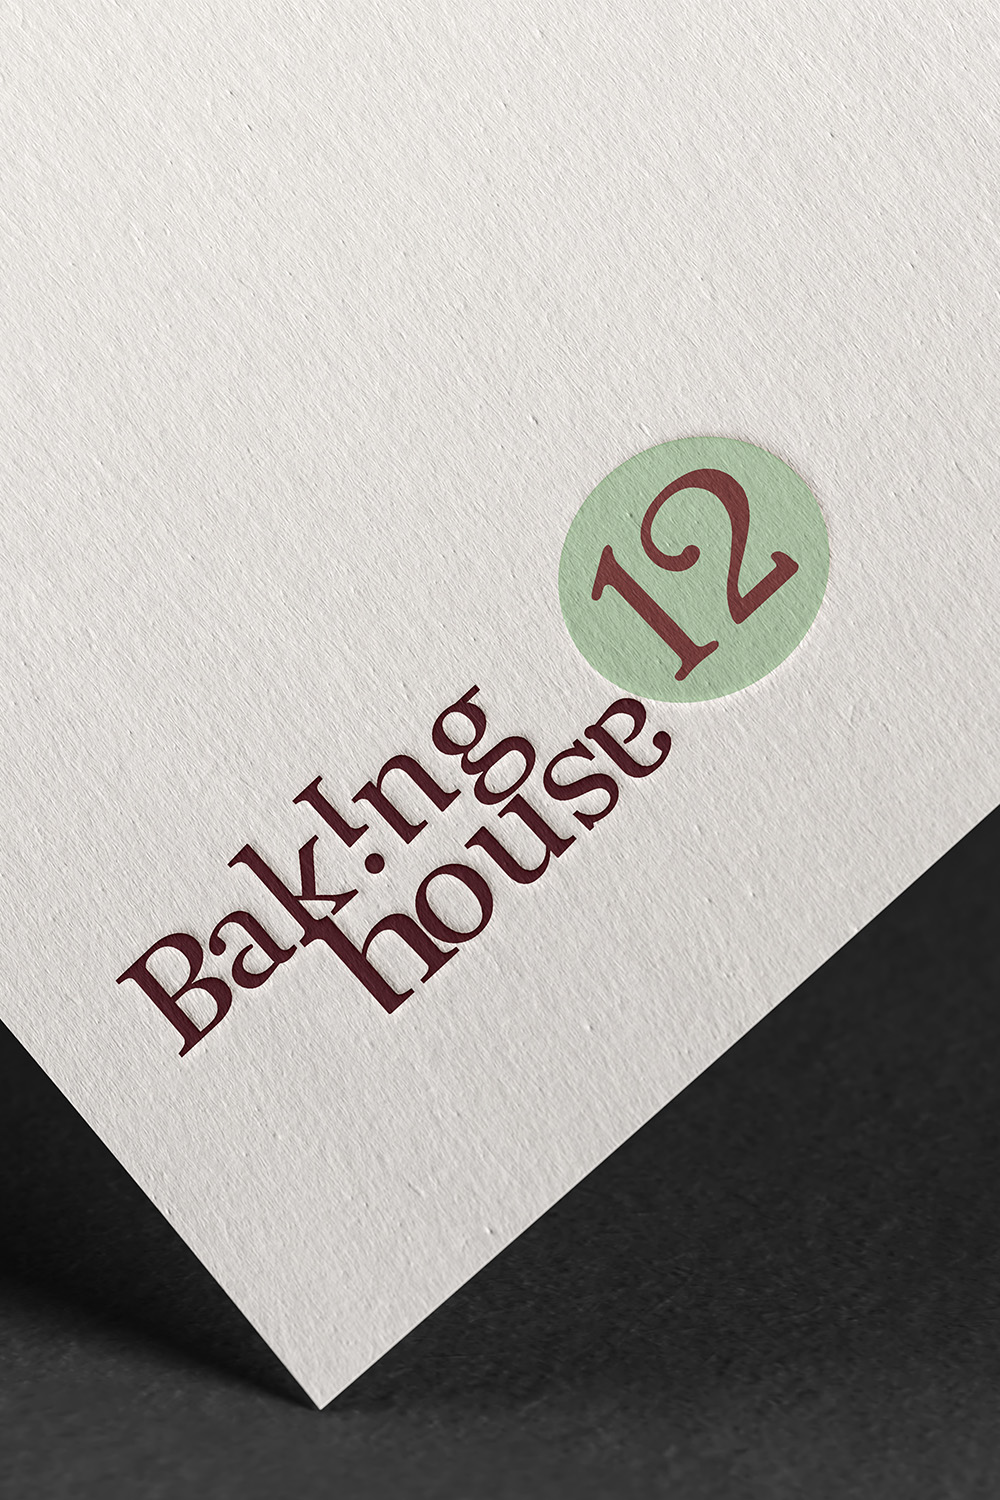 banking house logo cake vector pinterest preview image.